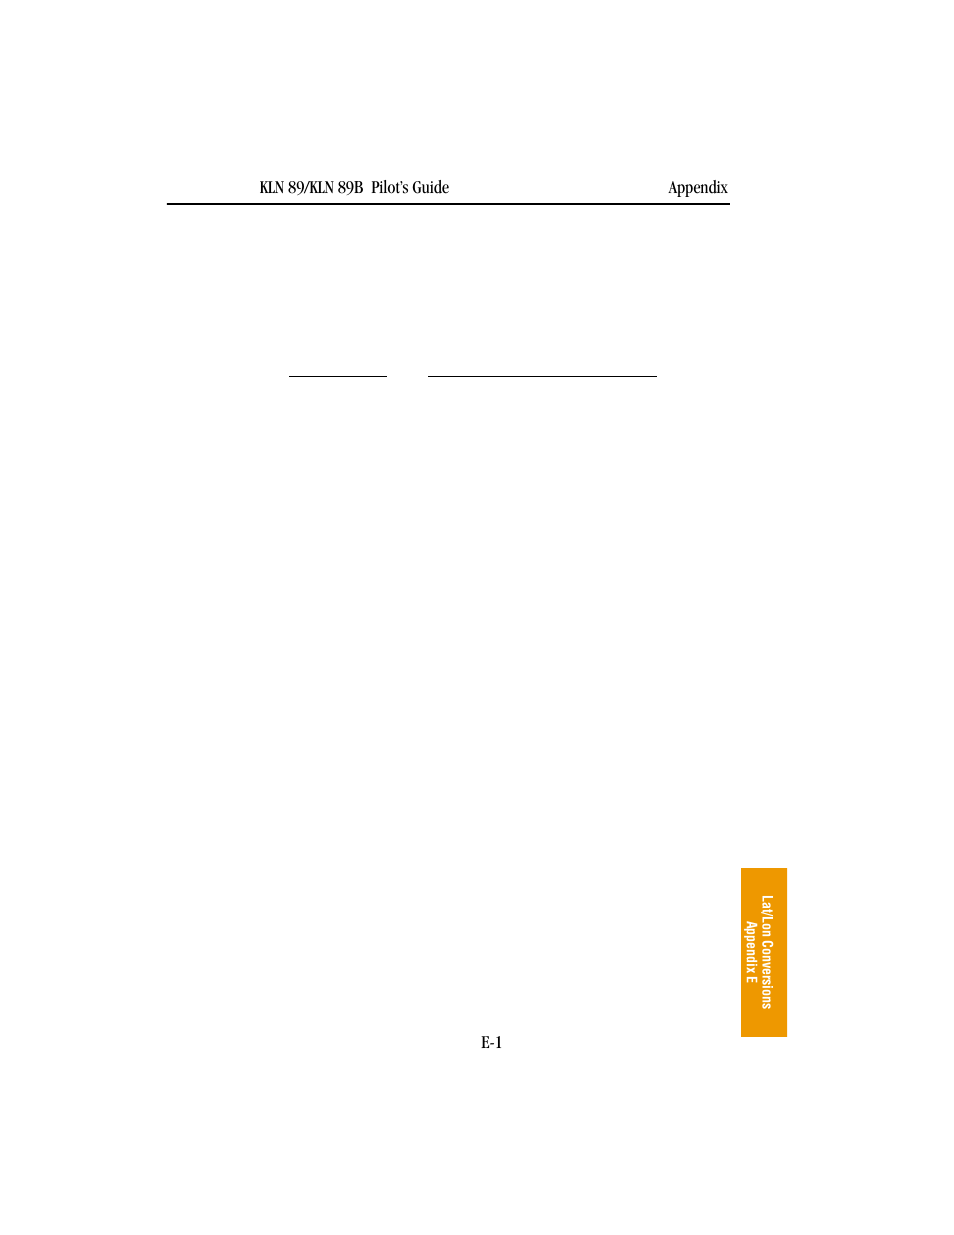 Appendix e - lat/lon conversions | BendixKing KLN 89B - Pilots Guide User Manual | Page 228 / 246